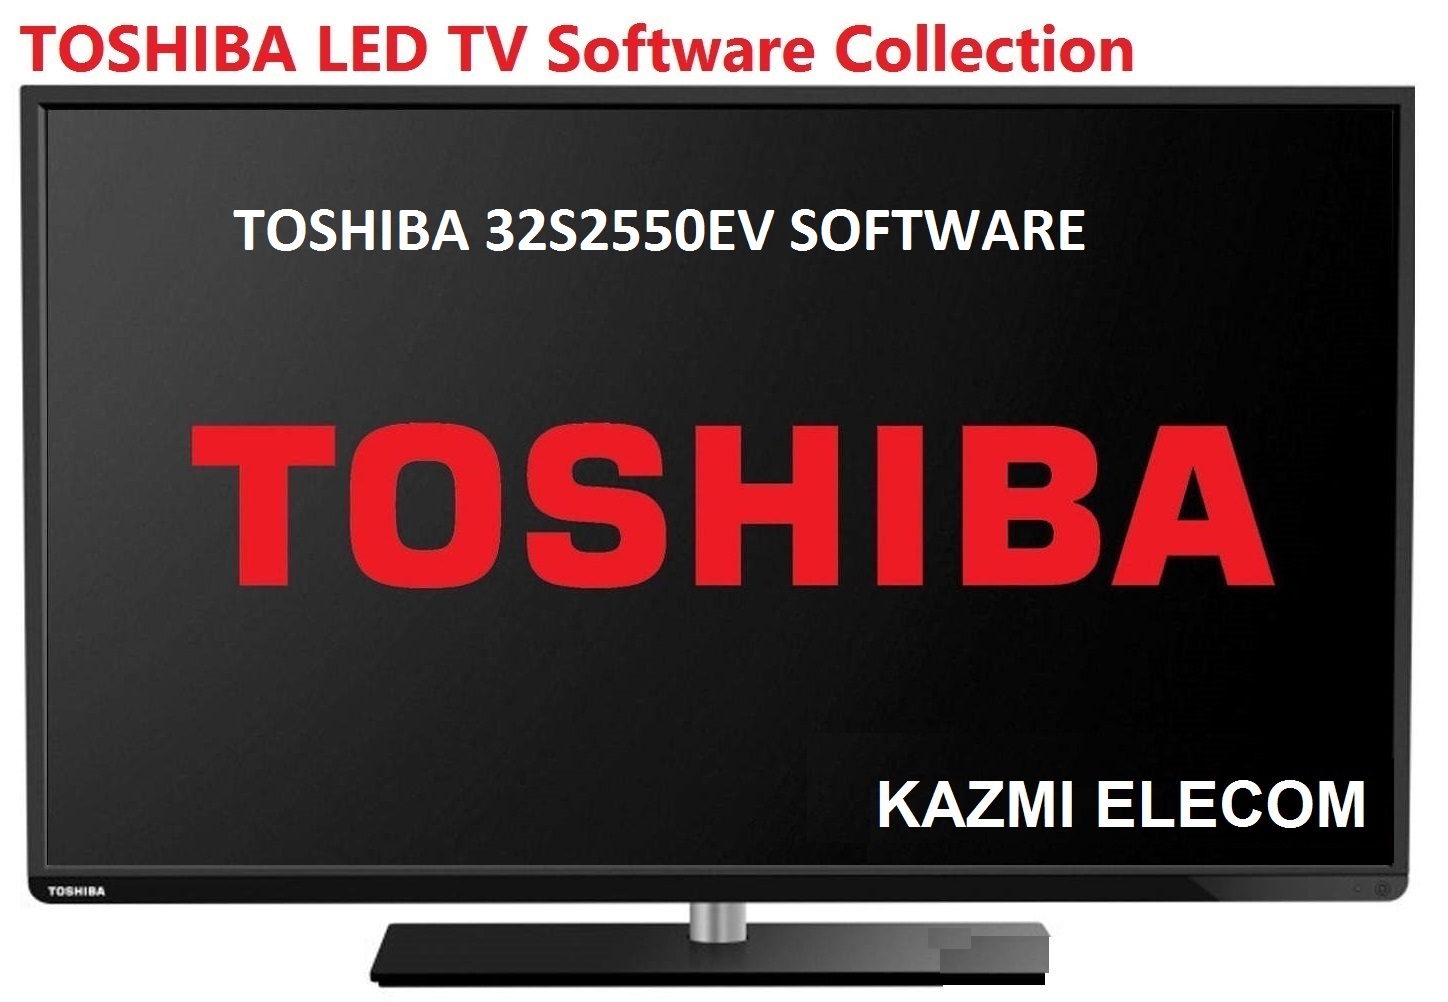 Toshiba 32S2550Ev